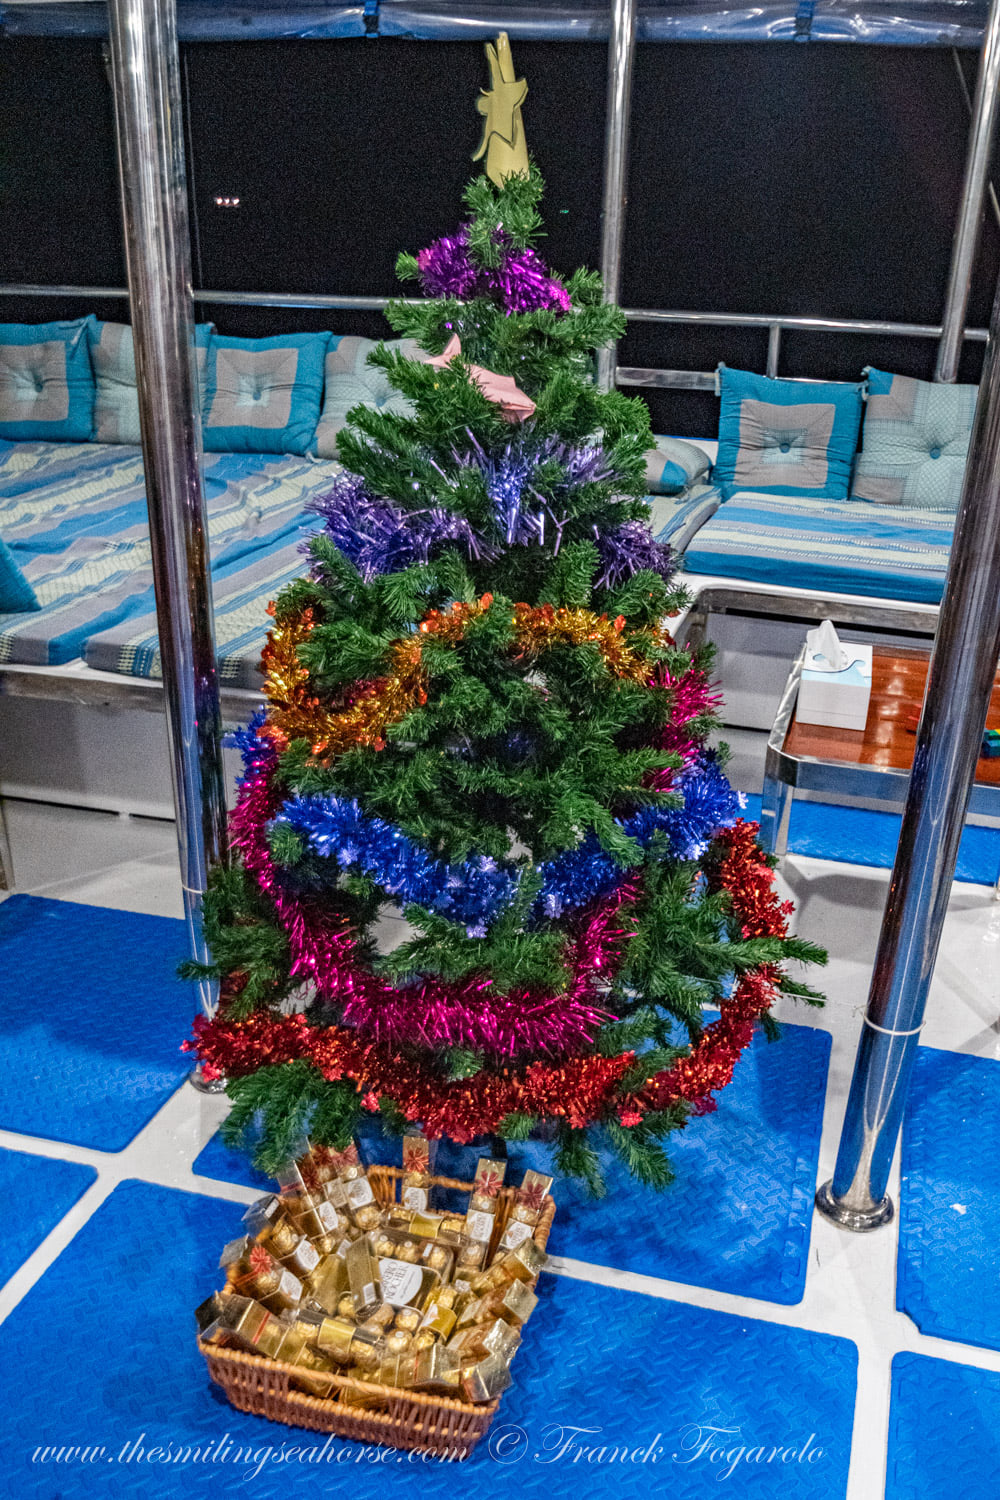 The Smiling Seahorse Christmas tree